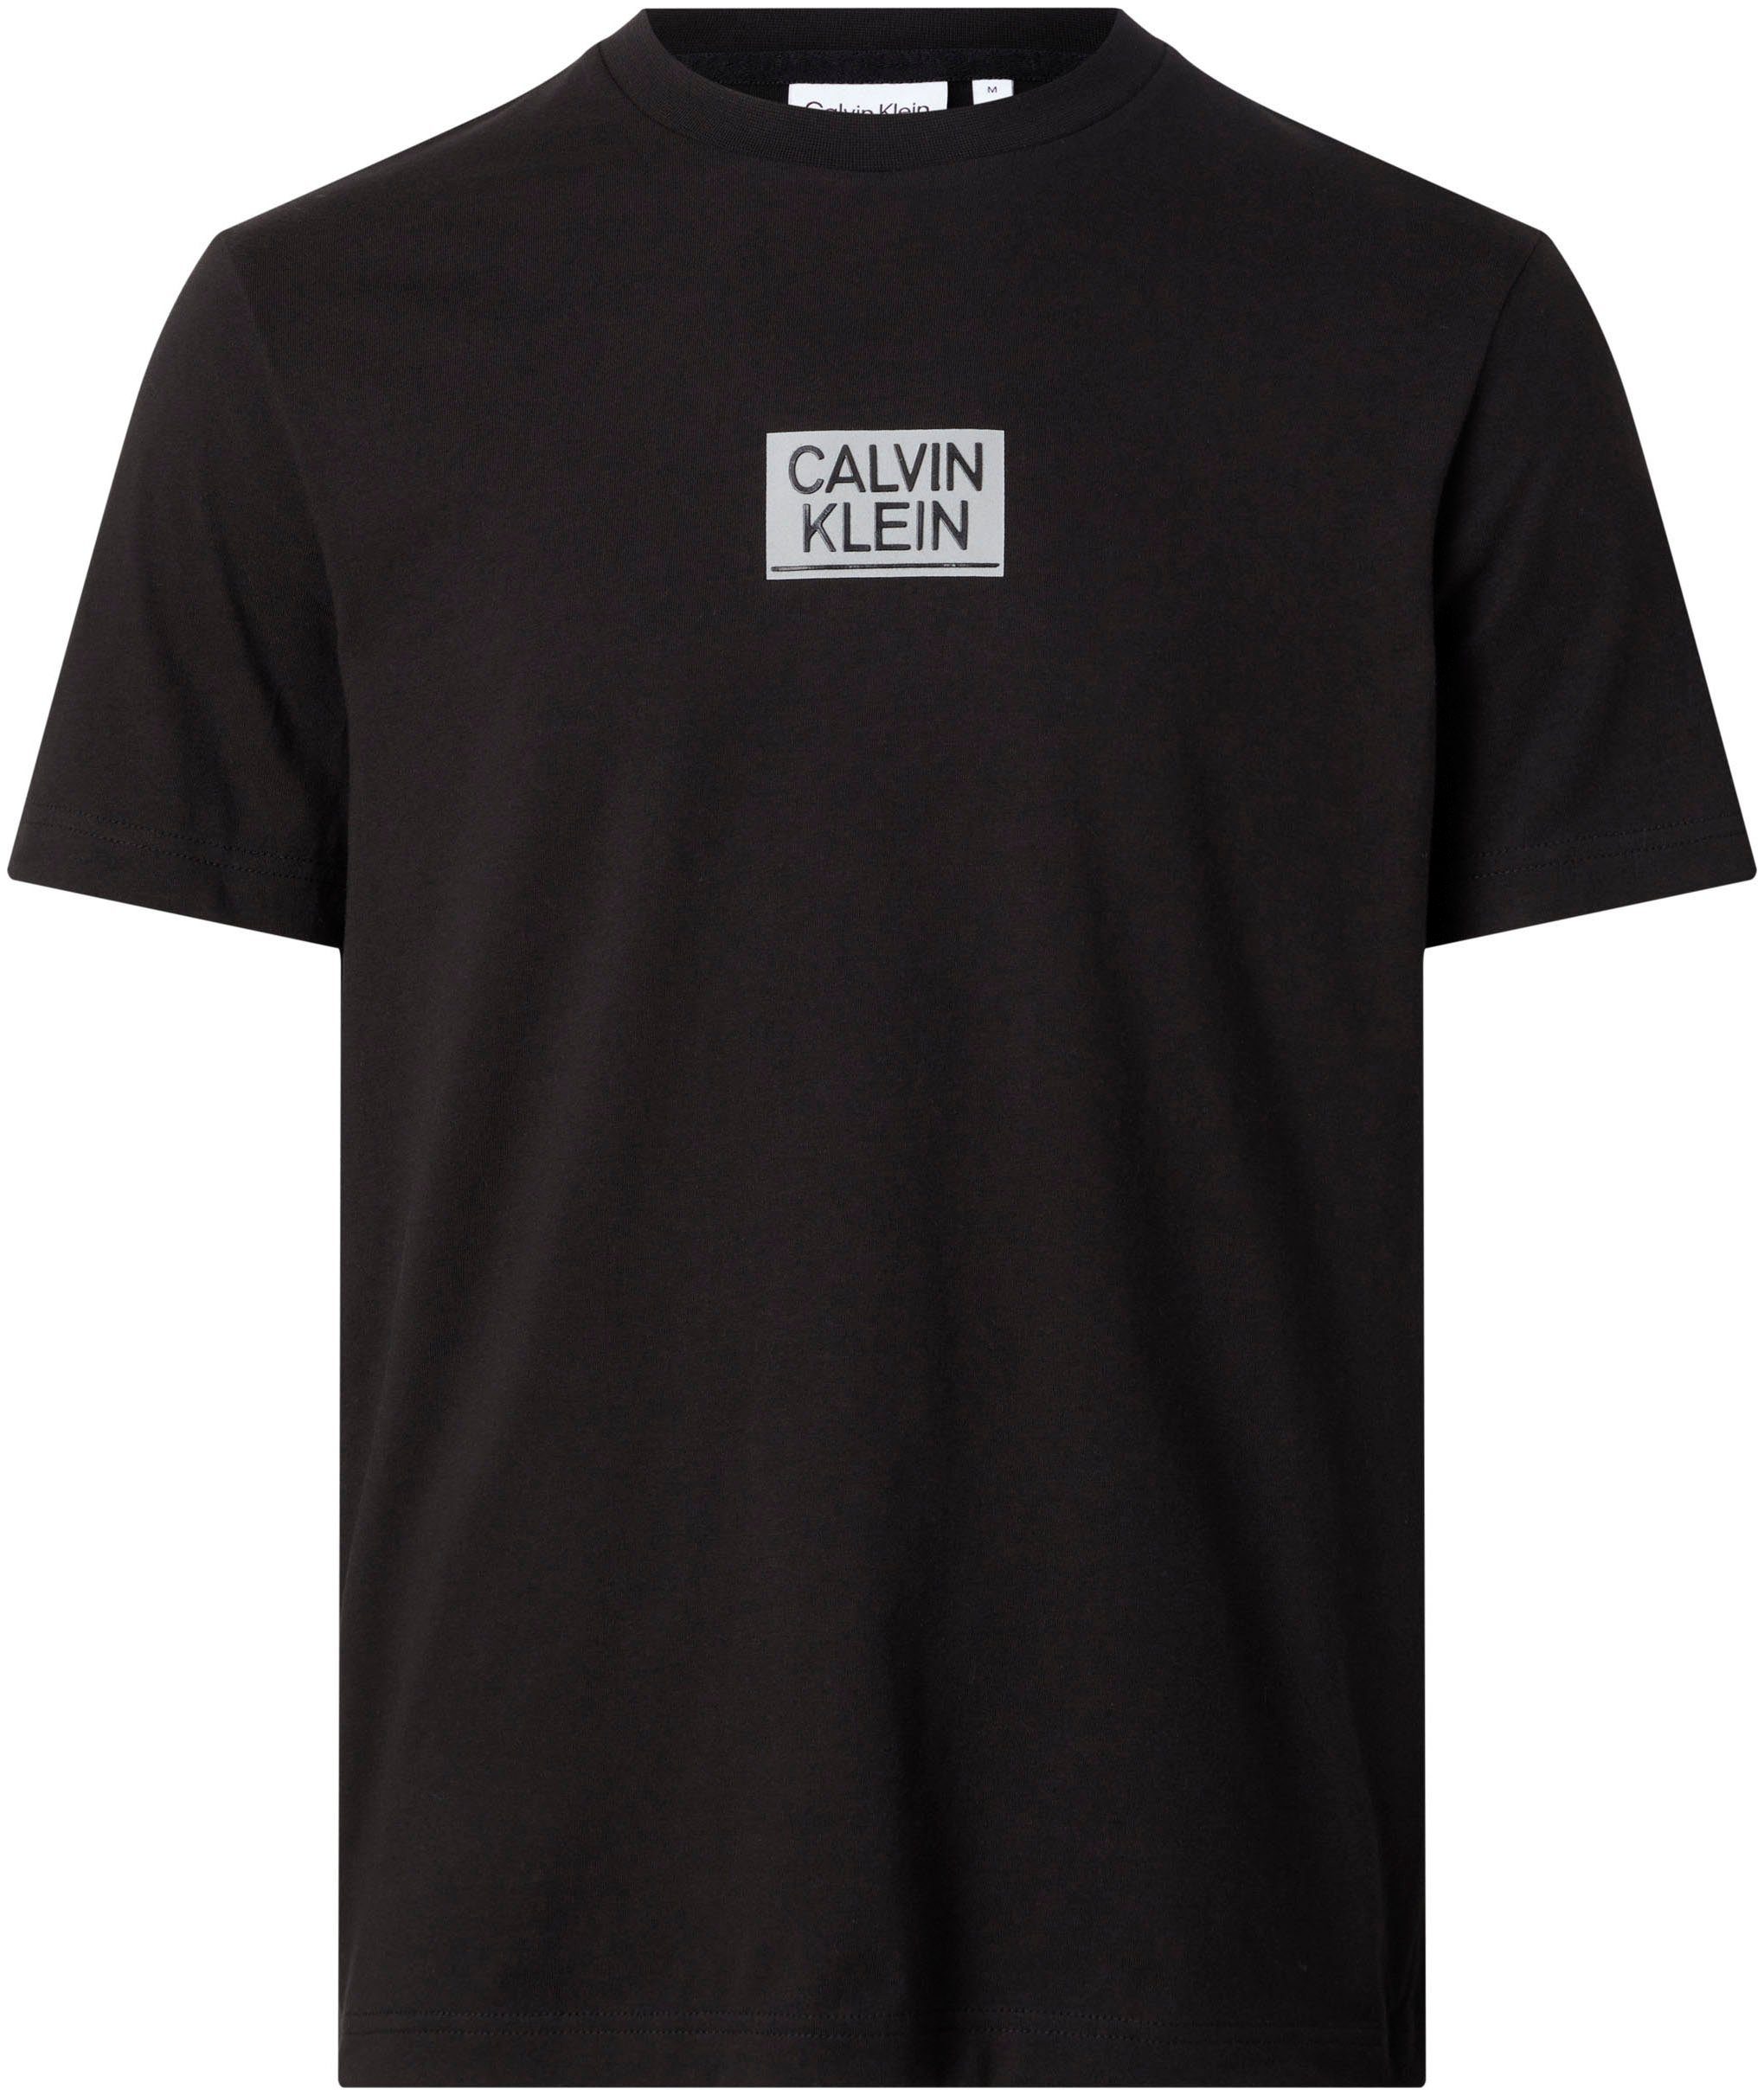 Calvin Klein T-Shirt LOGO GLOSS Ck T-SHIRT STENCIL Black